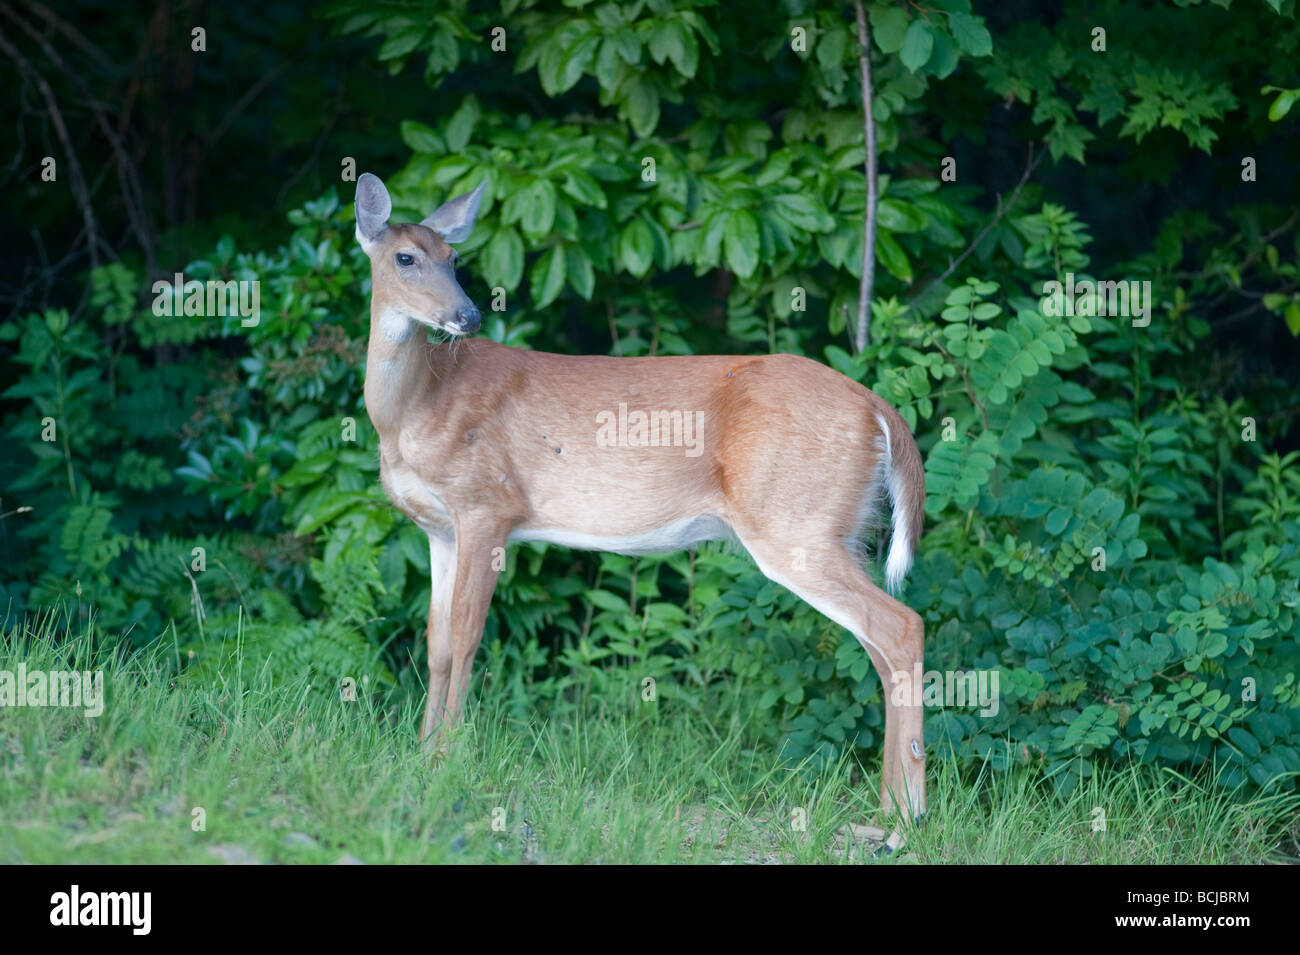 Wild femmina bianca di coda o di cervi rossi a piedi nei boschi con fogliame verde in background Foto Stock